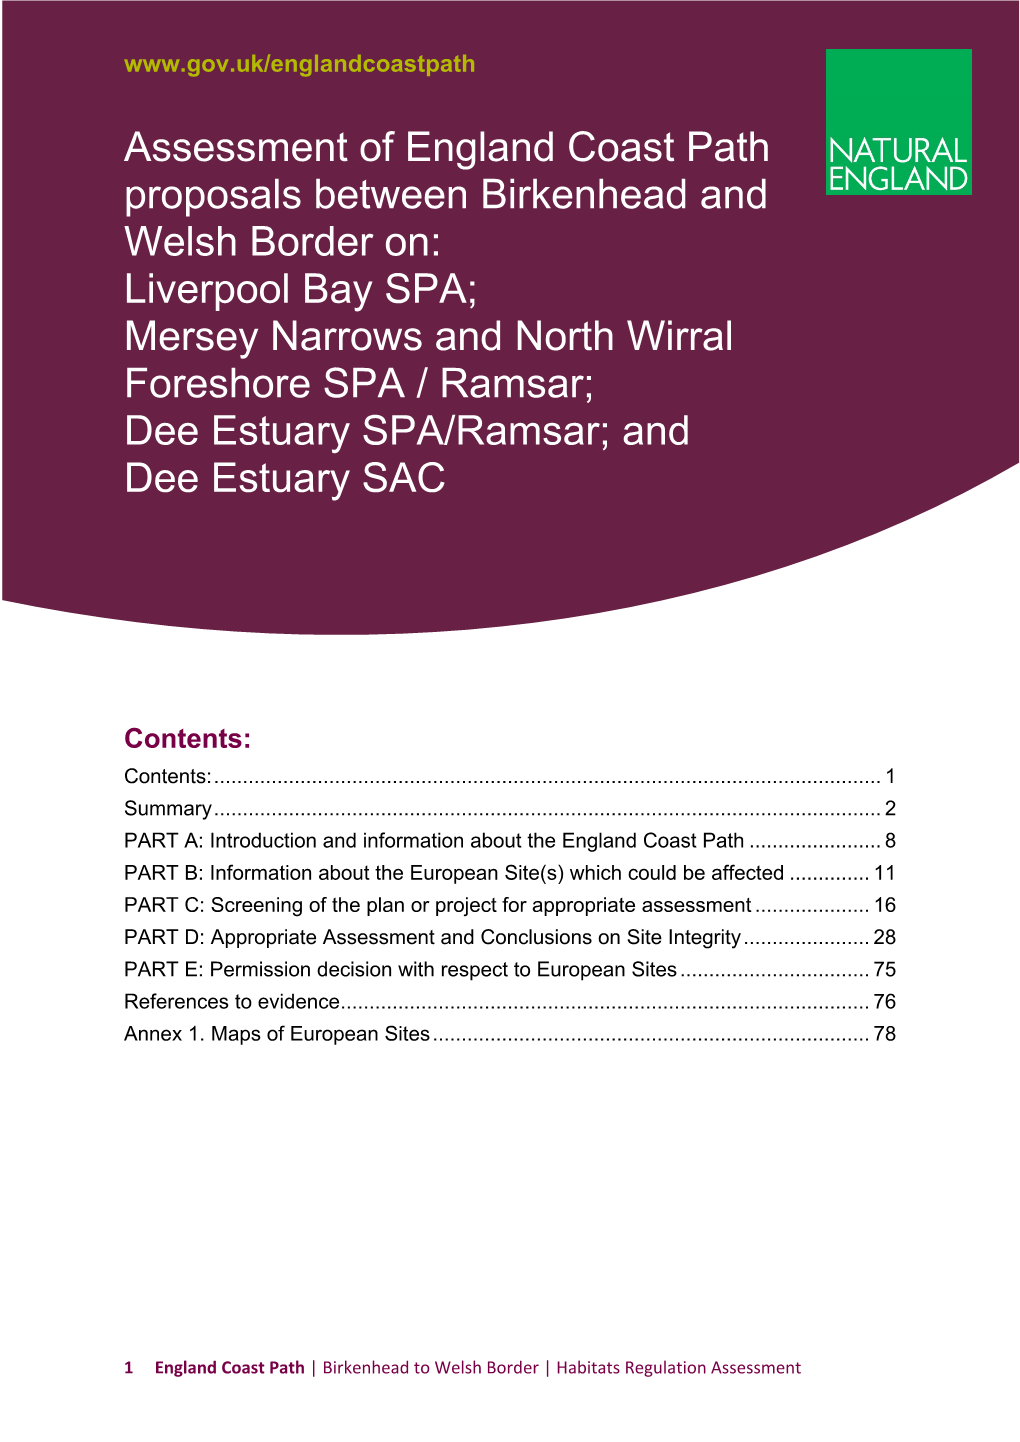 Birkenhead to Welsh Border | Habitats Regulation Assessment